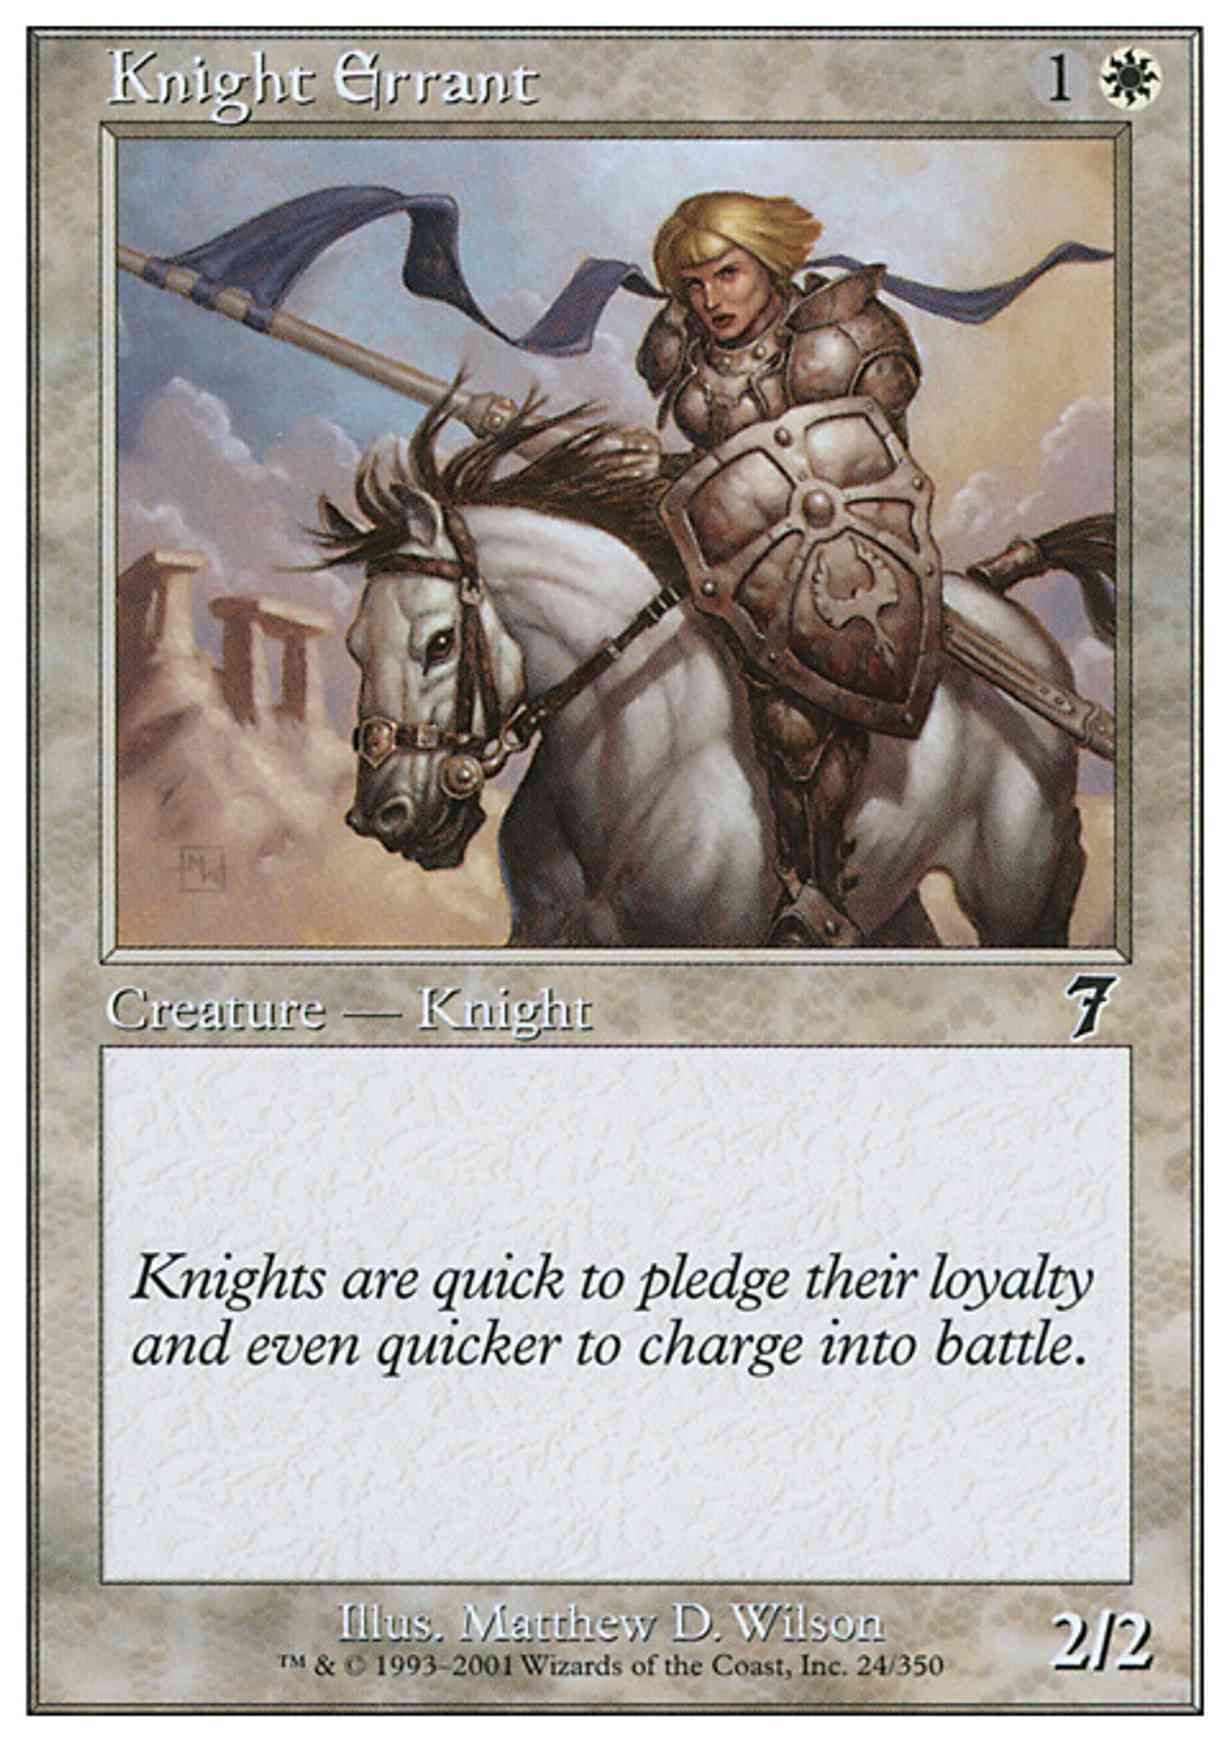 Knight Errant magic card front